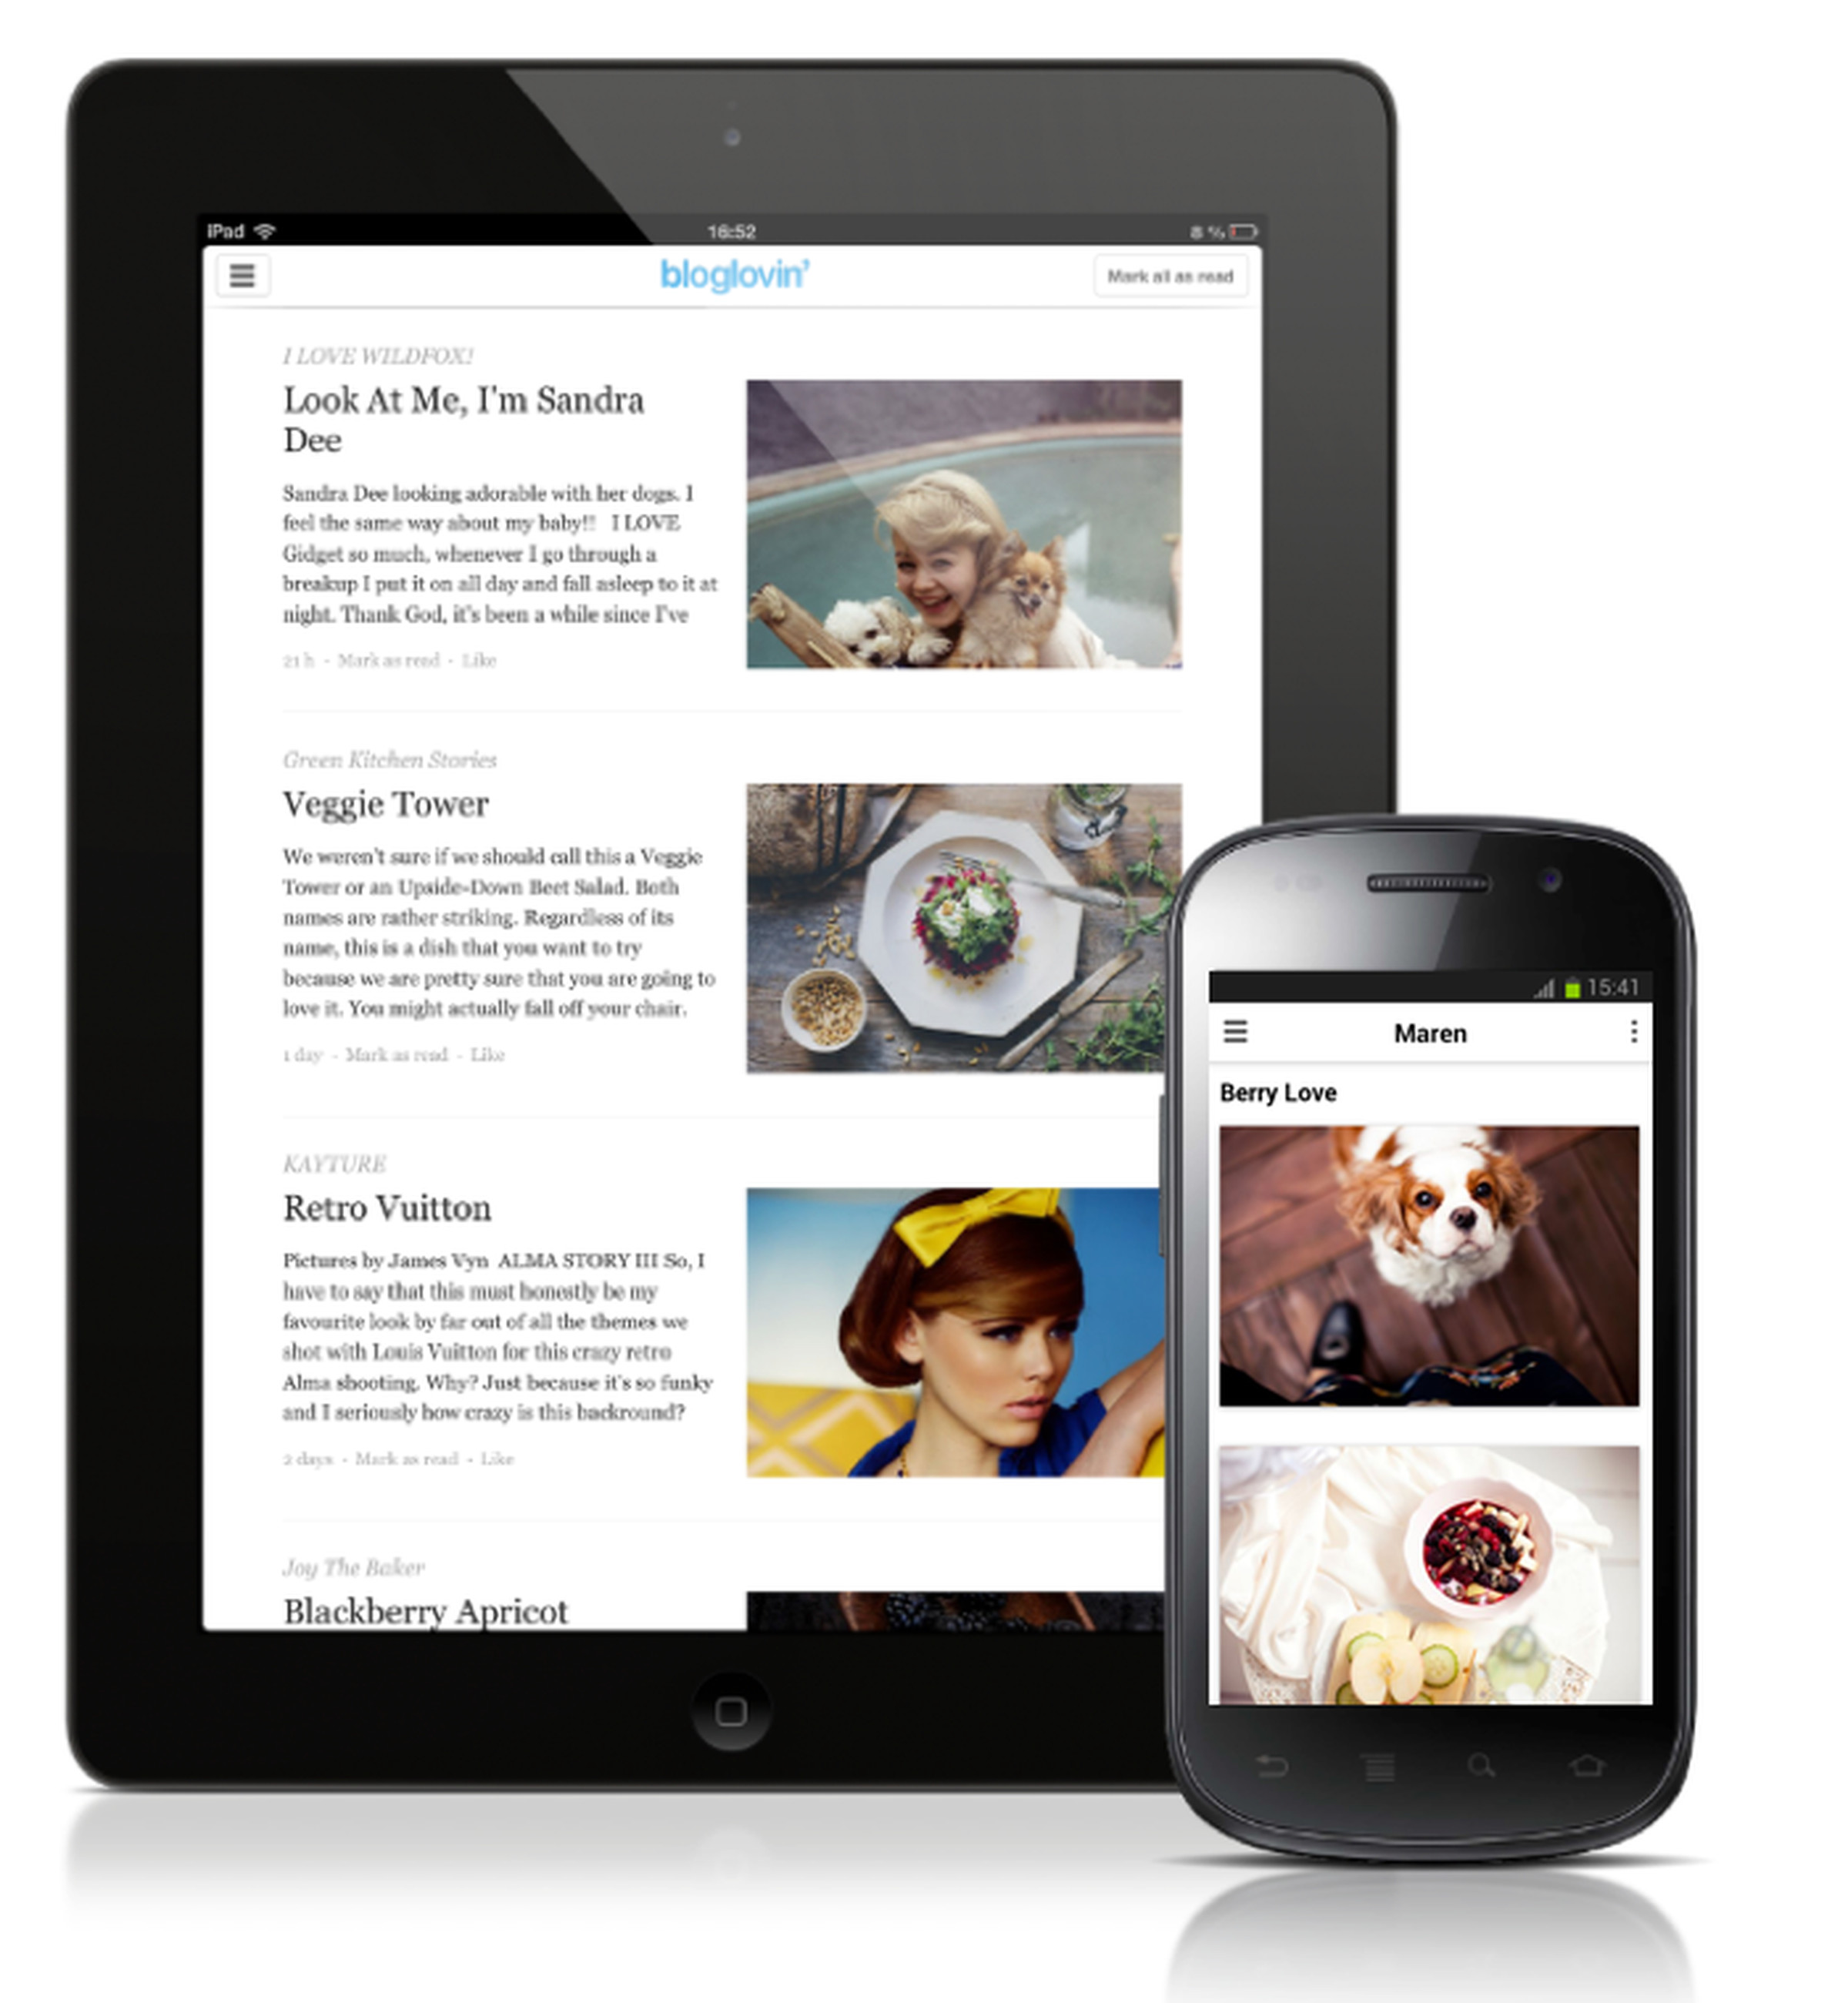 Bloglovin' iPad and Android app screenshots